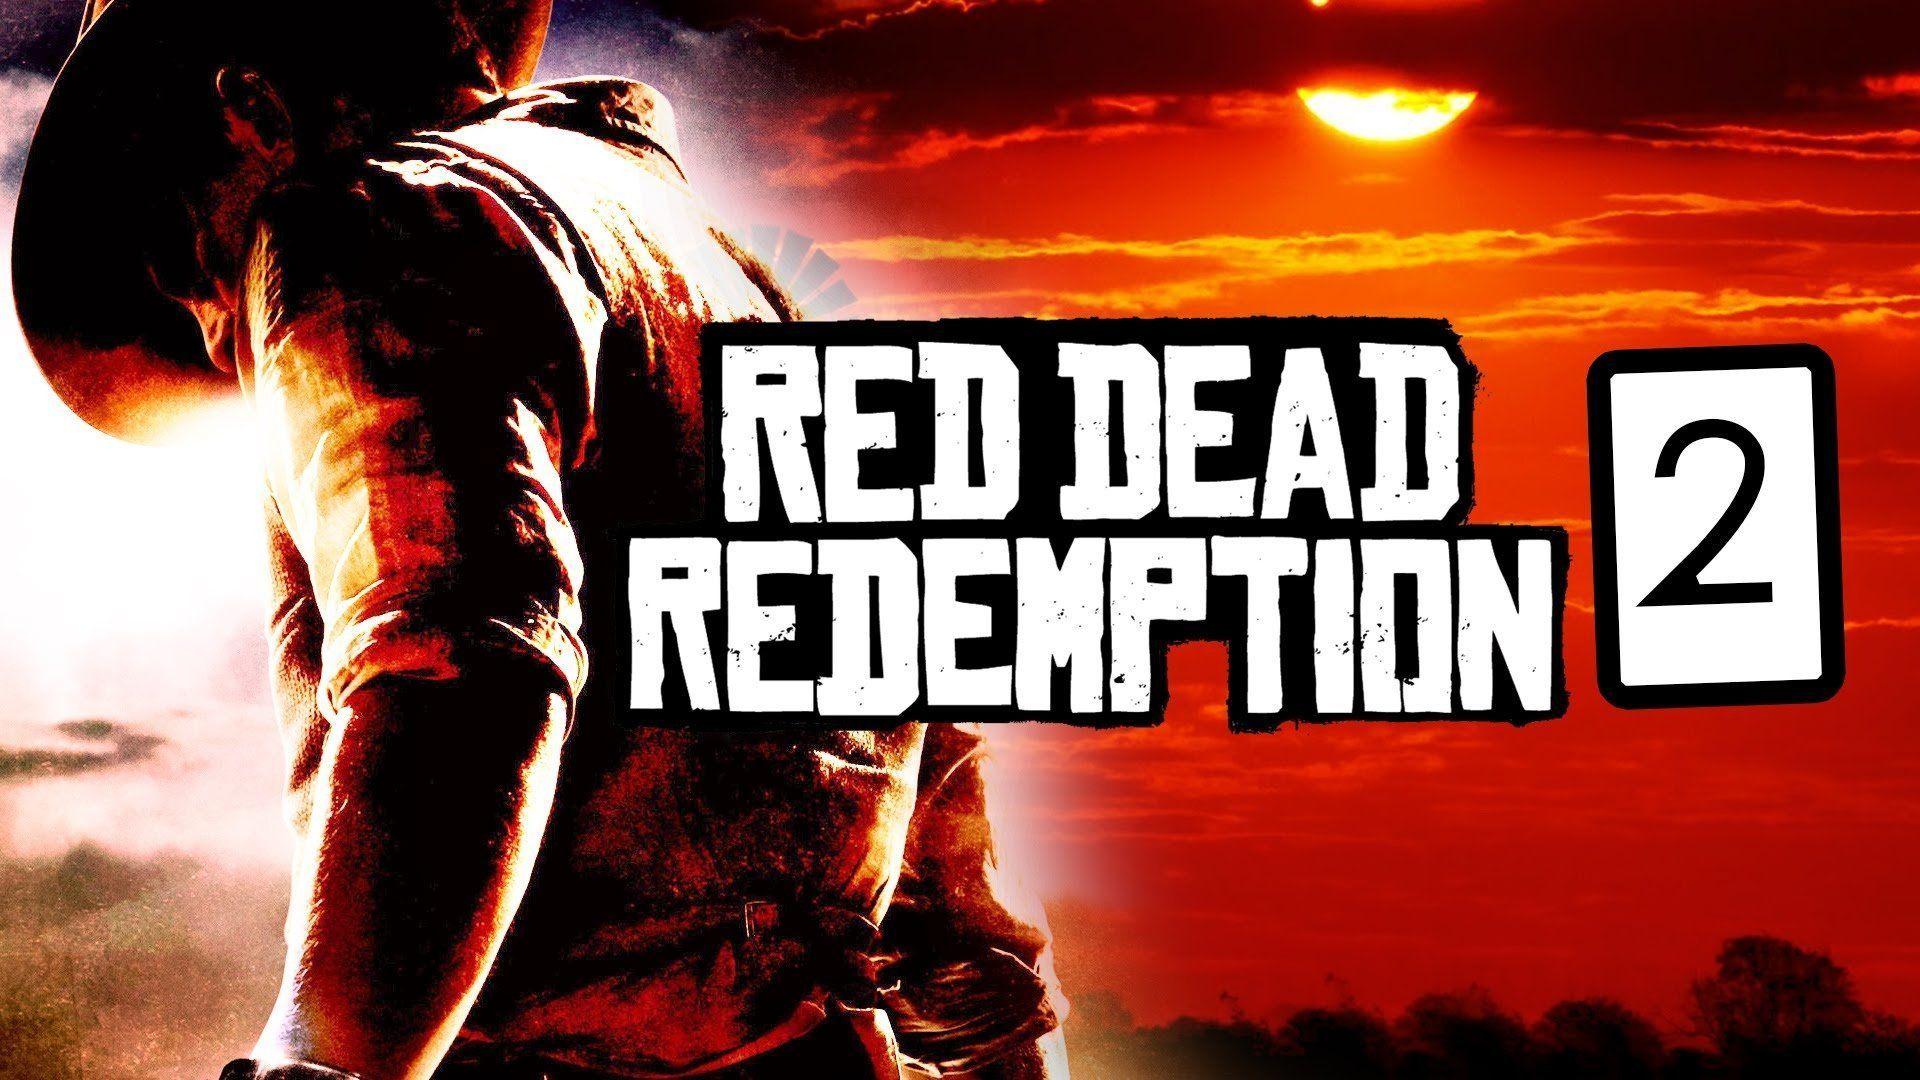 Red Dead Redemption 2 Wallpaper HD. Game Wallpaper